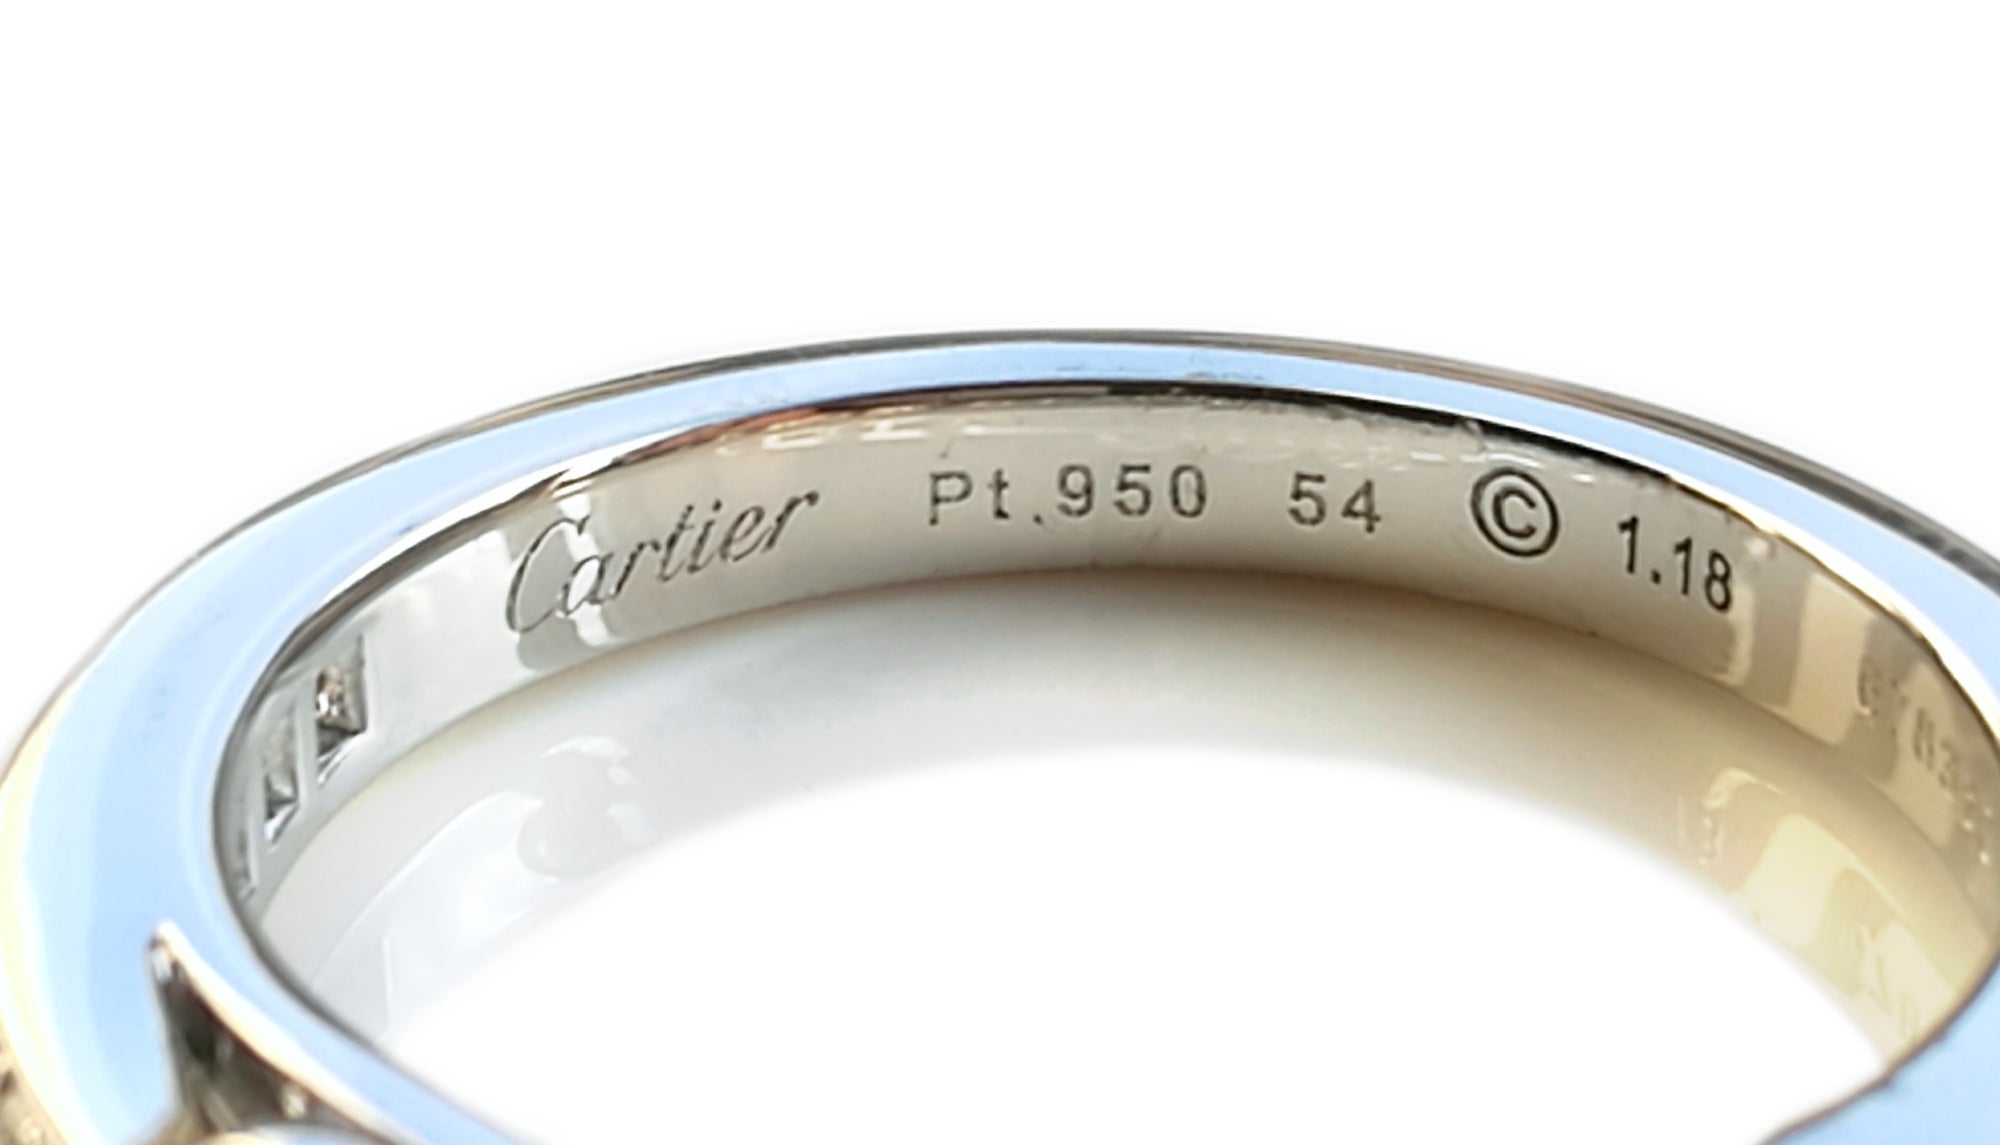 Cartier 1.18ct E/VVS1 Triple XXX Ballerine Round Brilliant Diamond Engagement Ring